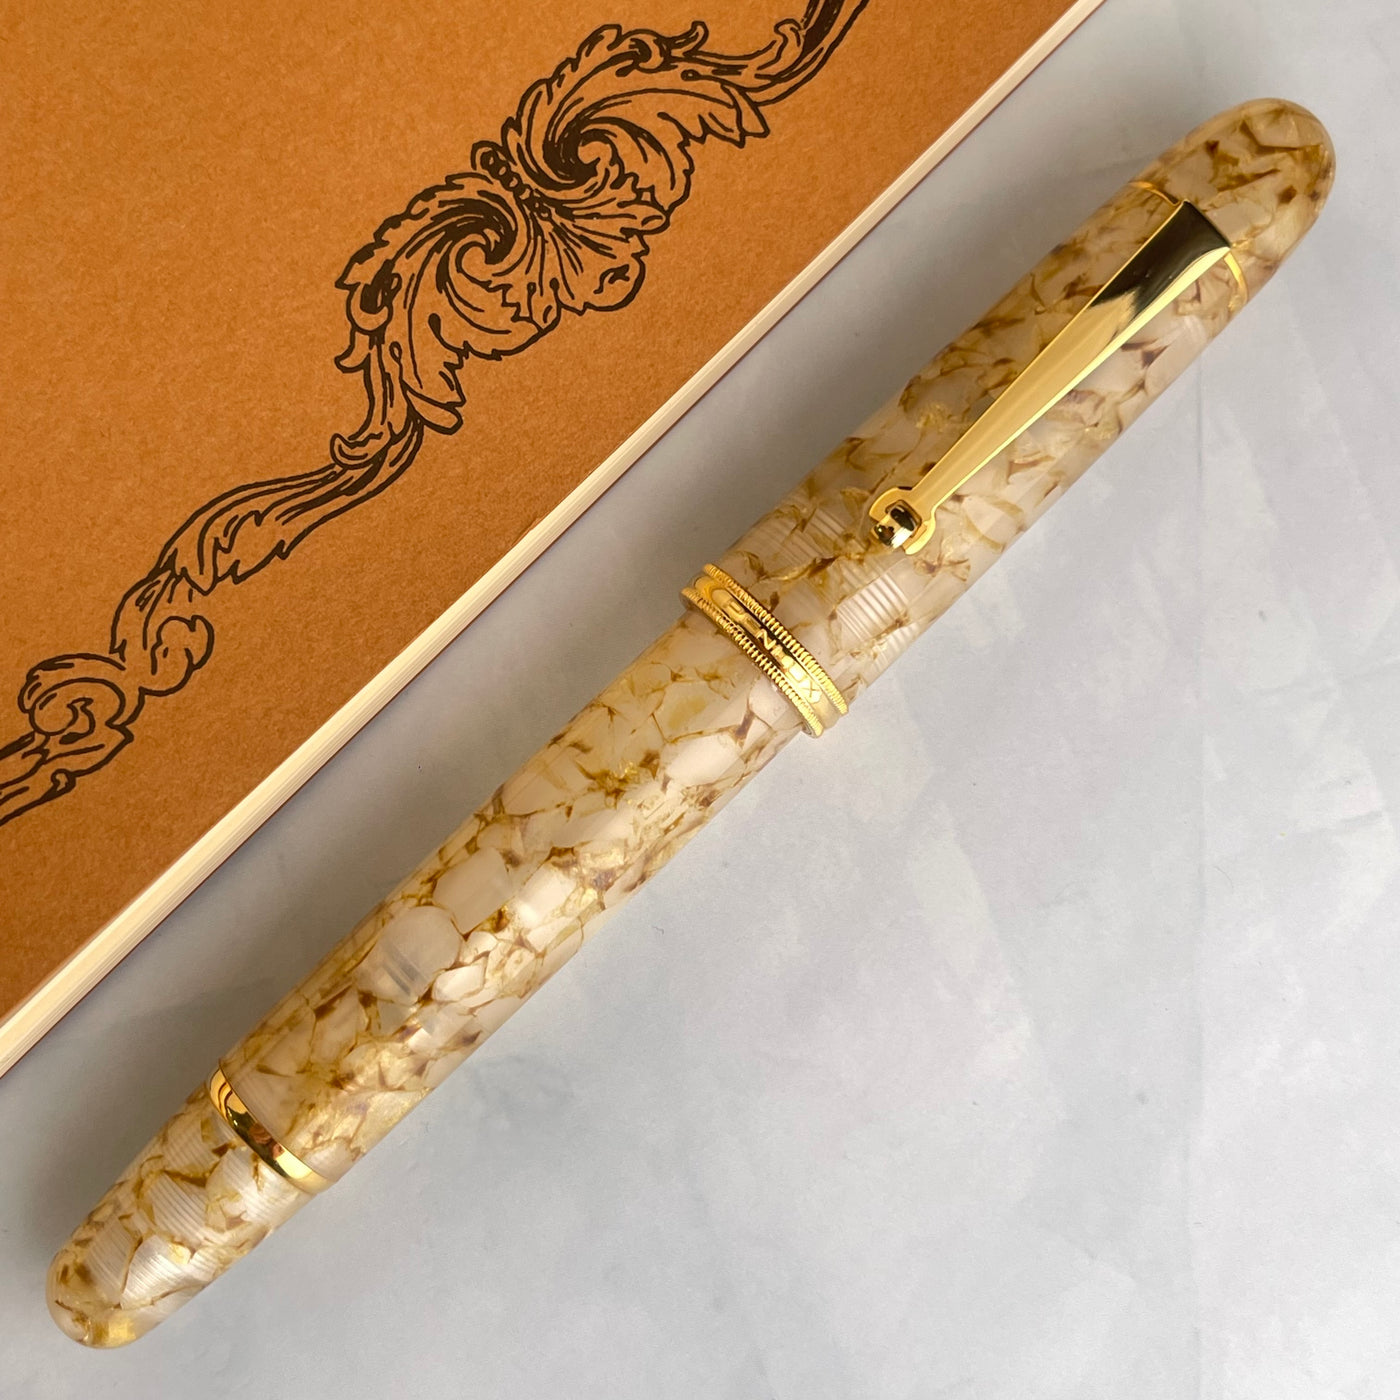 Penlux Masterpiece Grande Fountain Pen - Golden Crystal